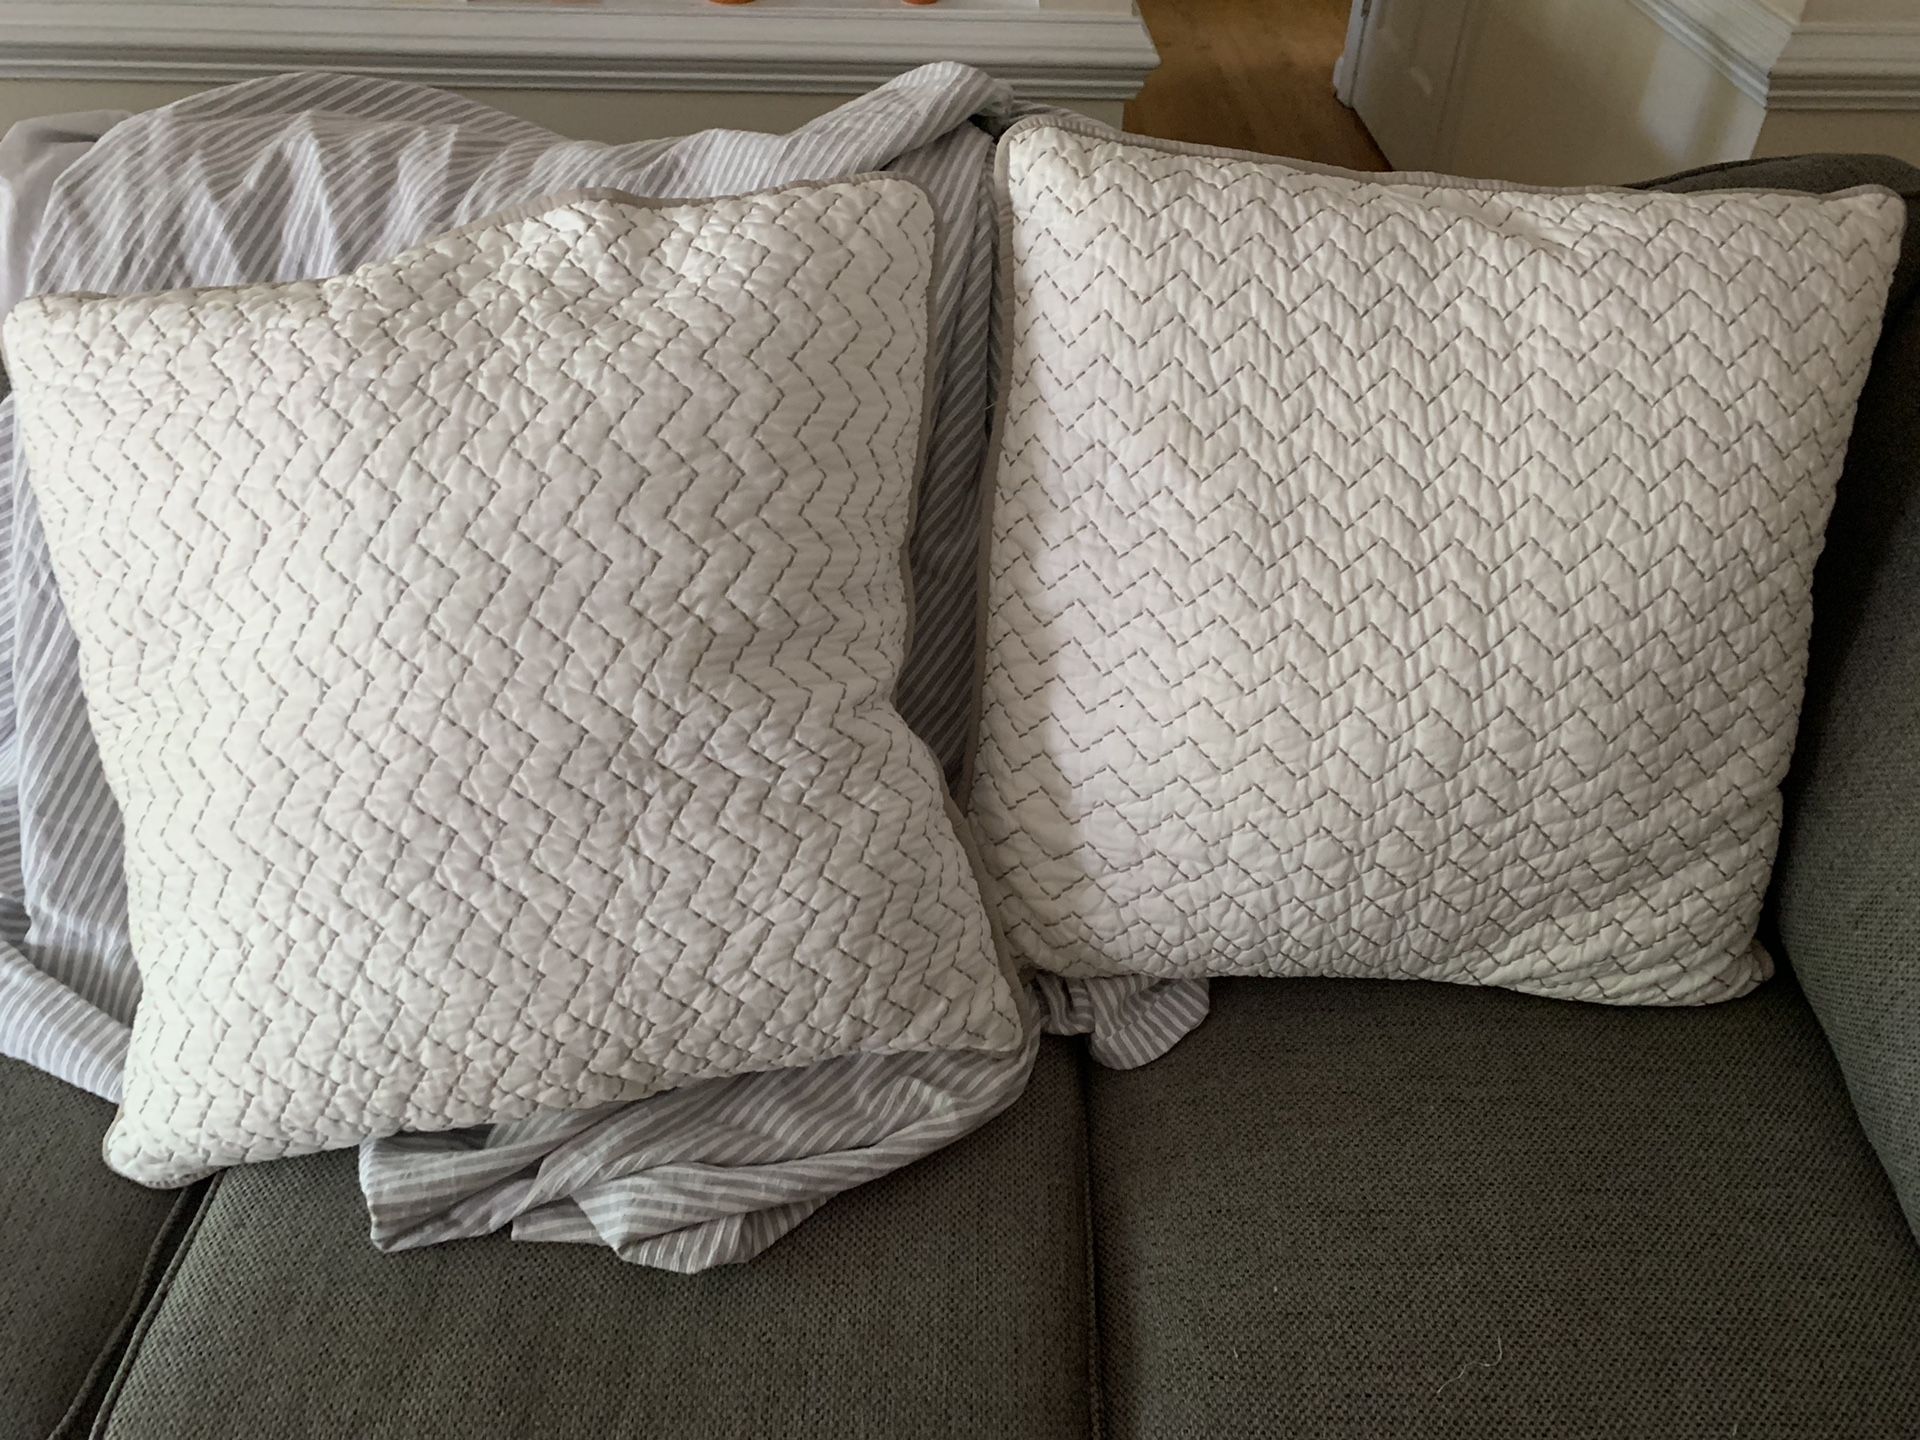 Pending - Decorative Pillows! 26x26